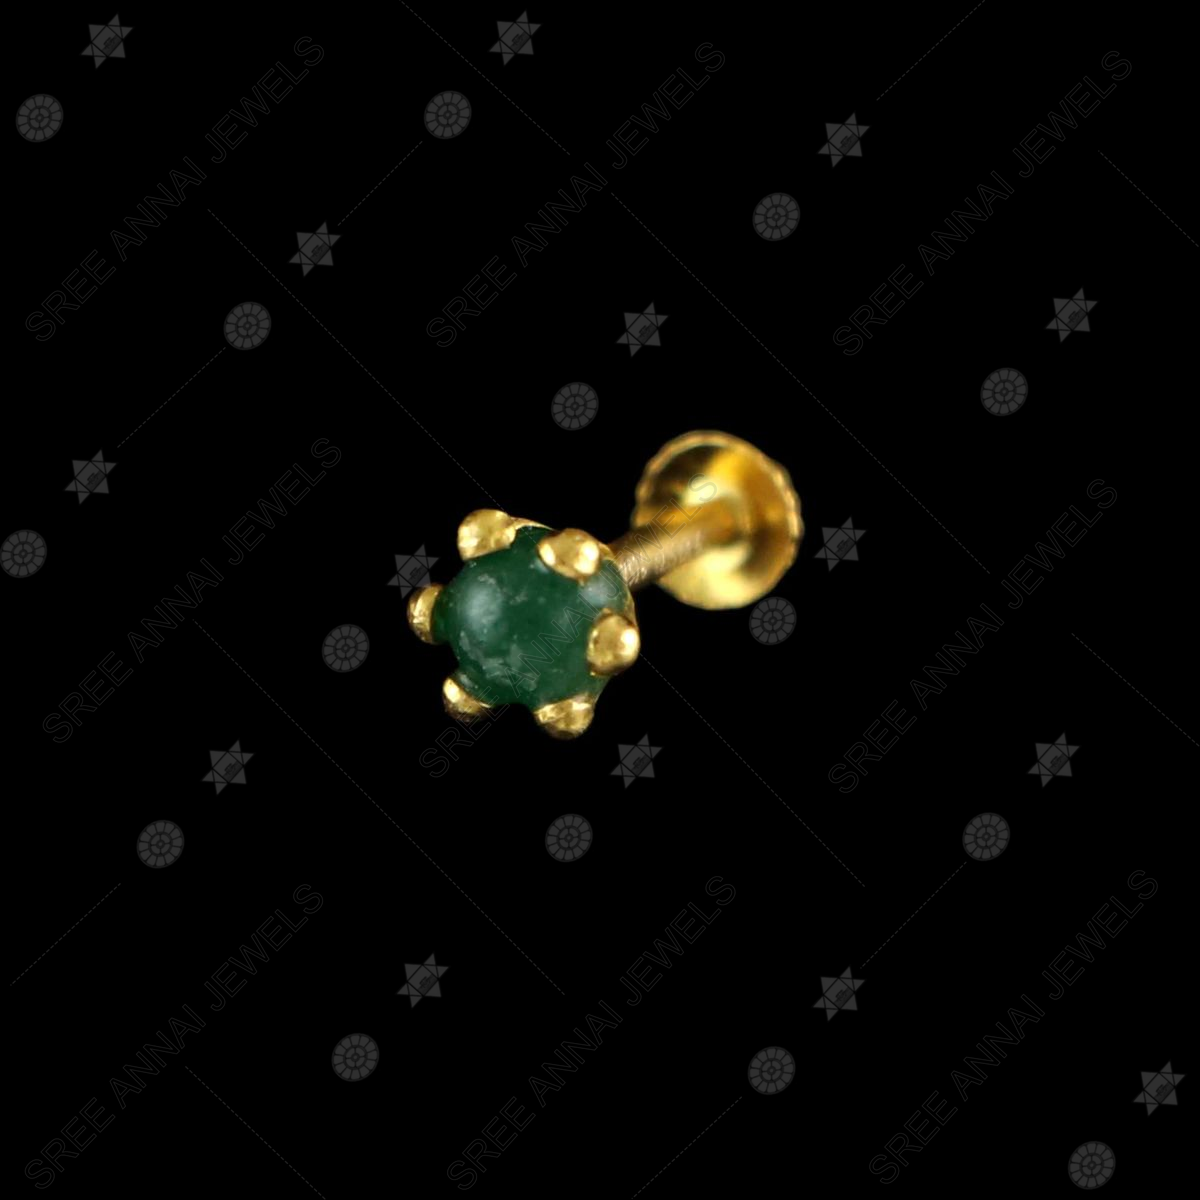 Buy DURGA PRASAD JEWELLERS Stone setted Gold Nose ring, सोने की नाक की  अंगूठी, 22k Hallmarked gold, weight- 0.280MILI at Amazon.in